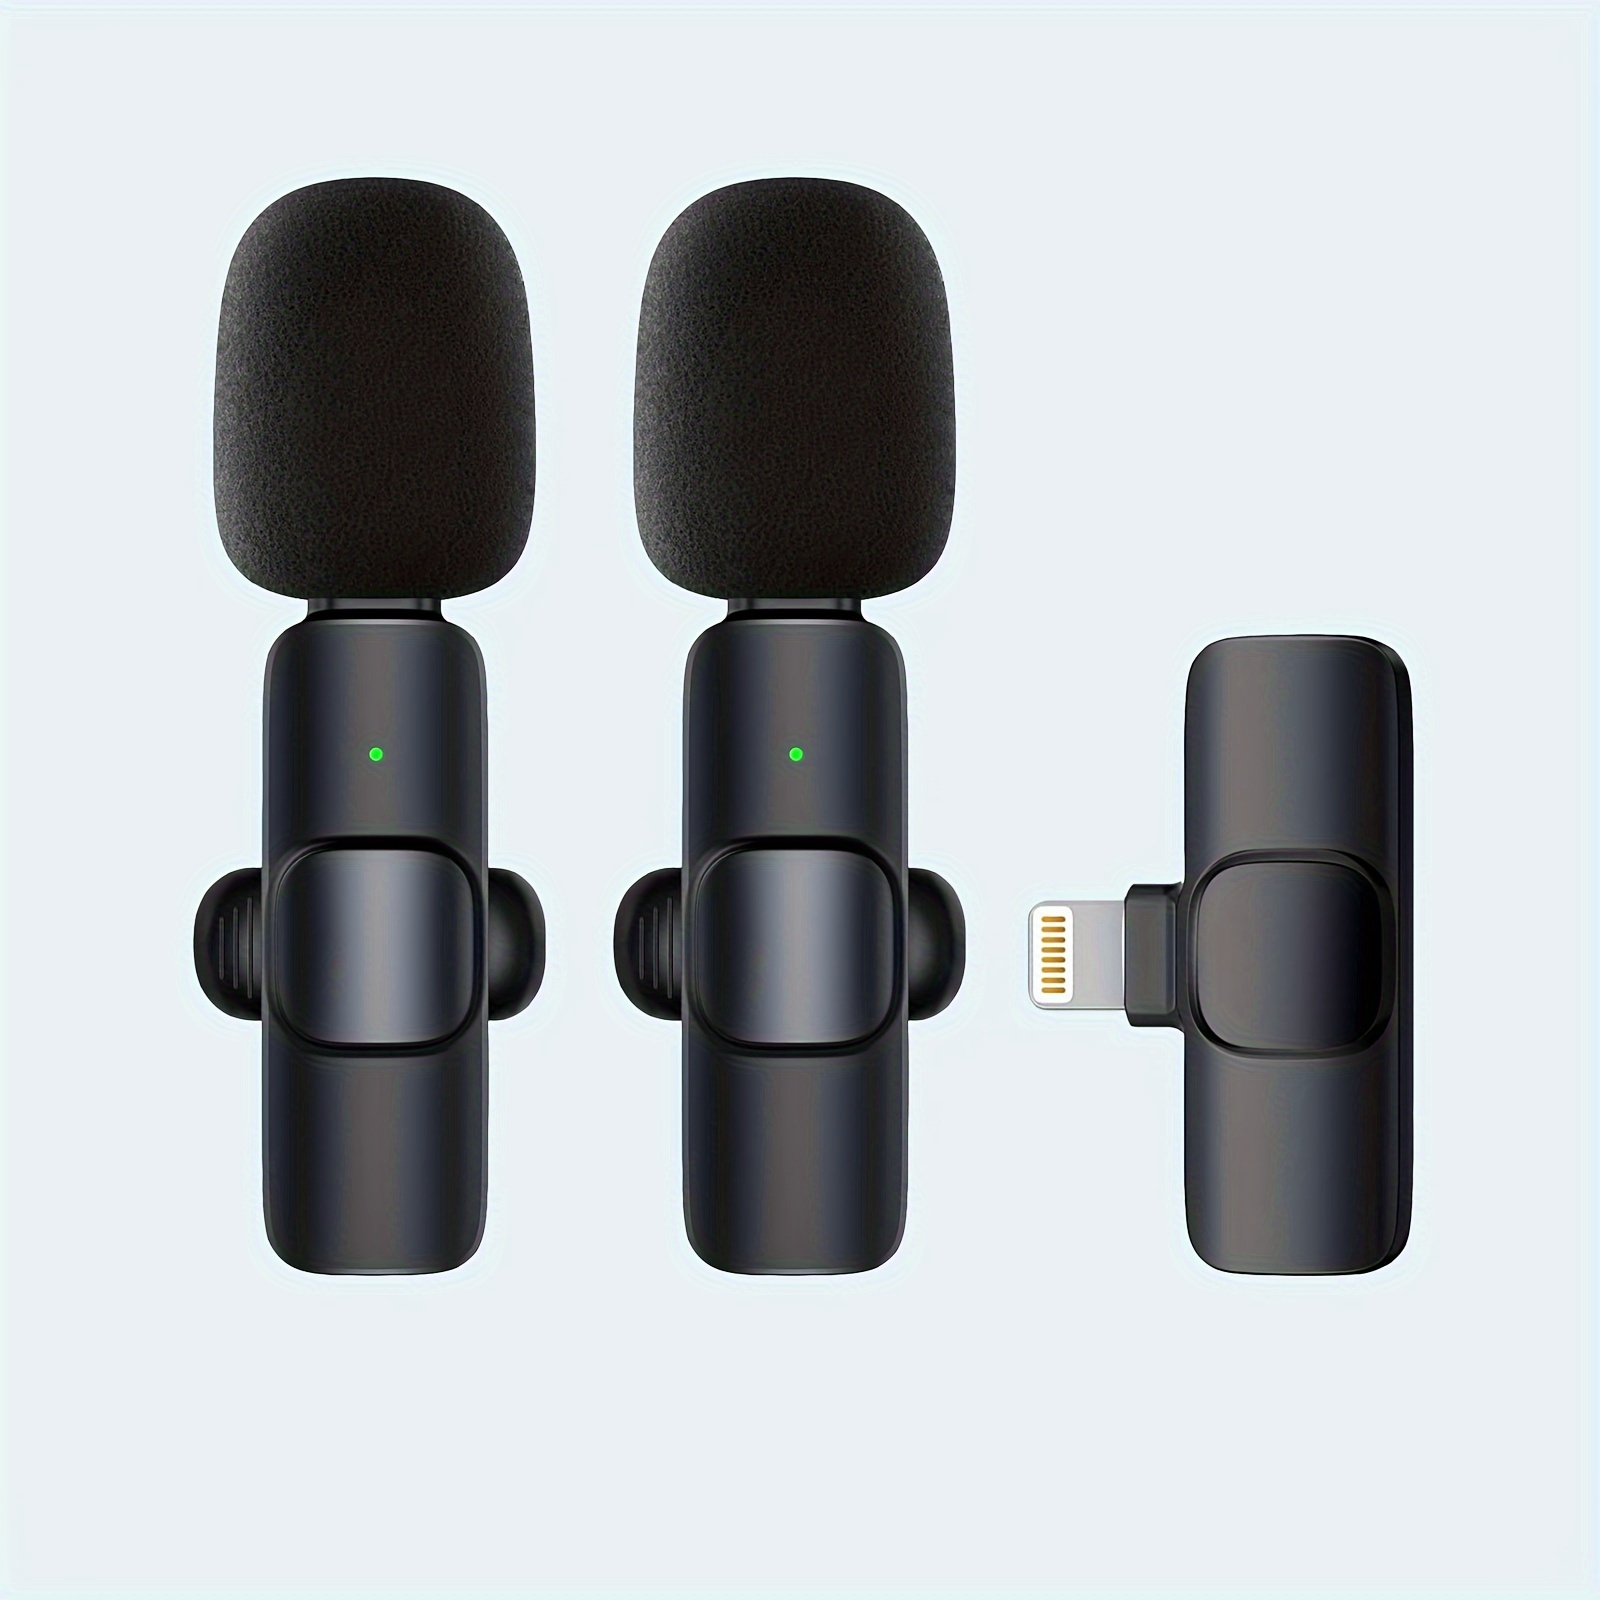 Microphone cravate filaire Synco S6